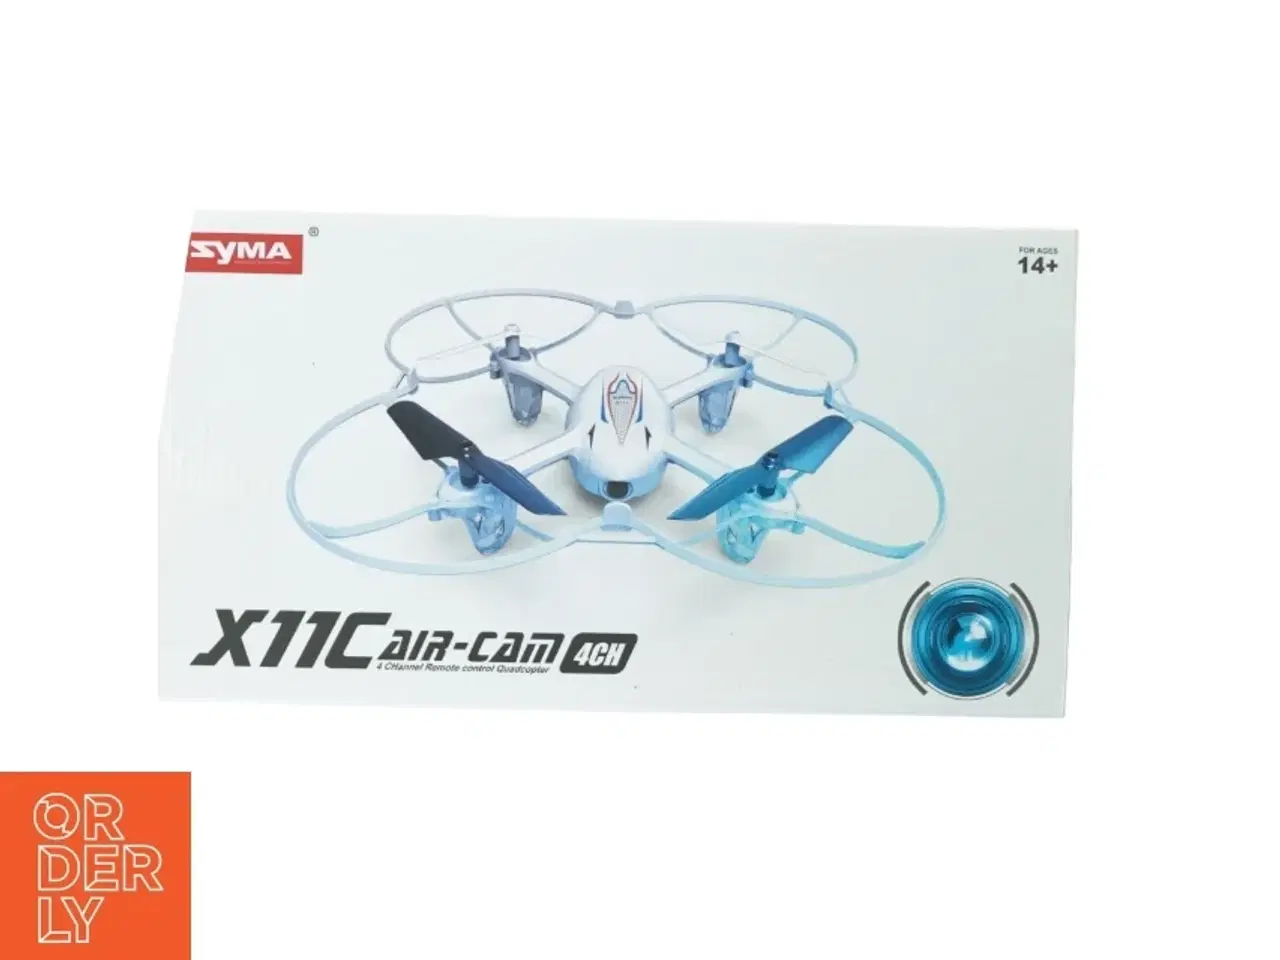 Billede 1 - Air cam drone fra Zyma (+14 år)